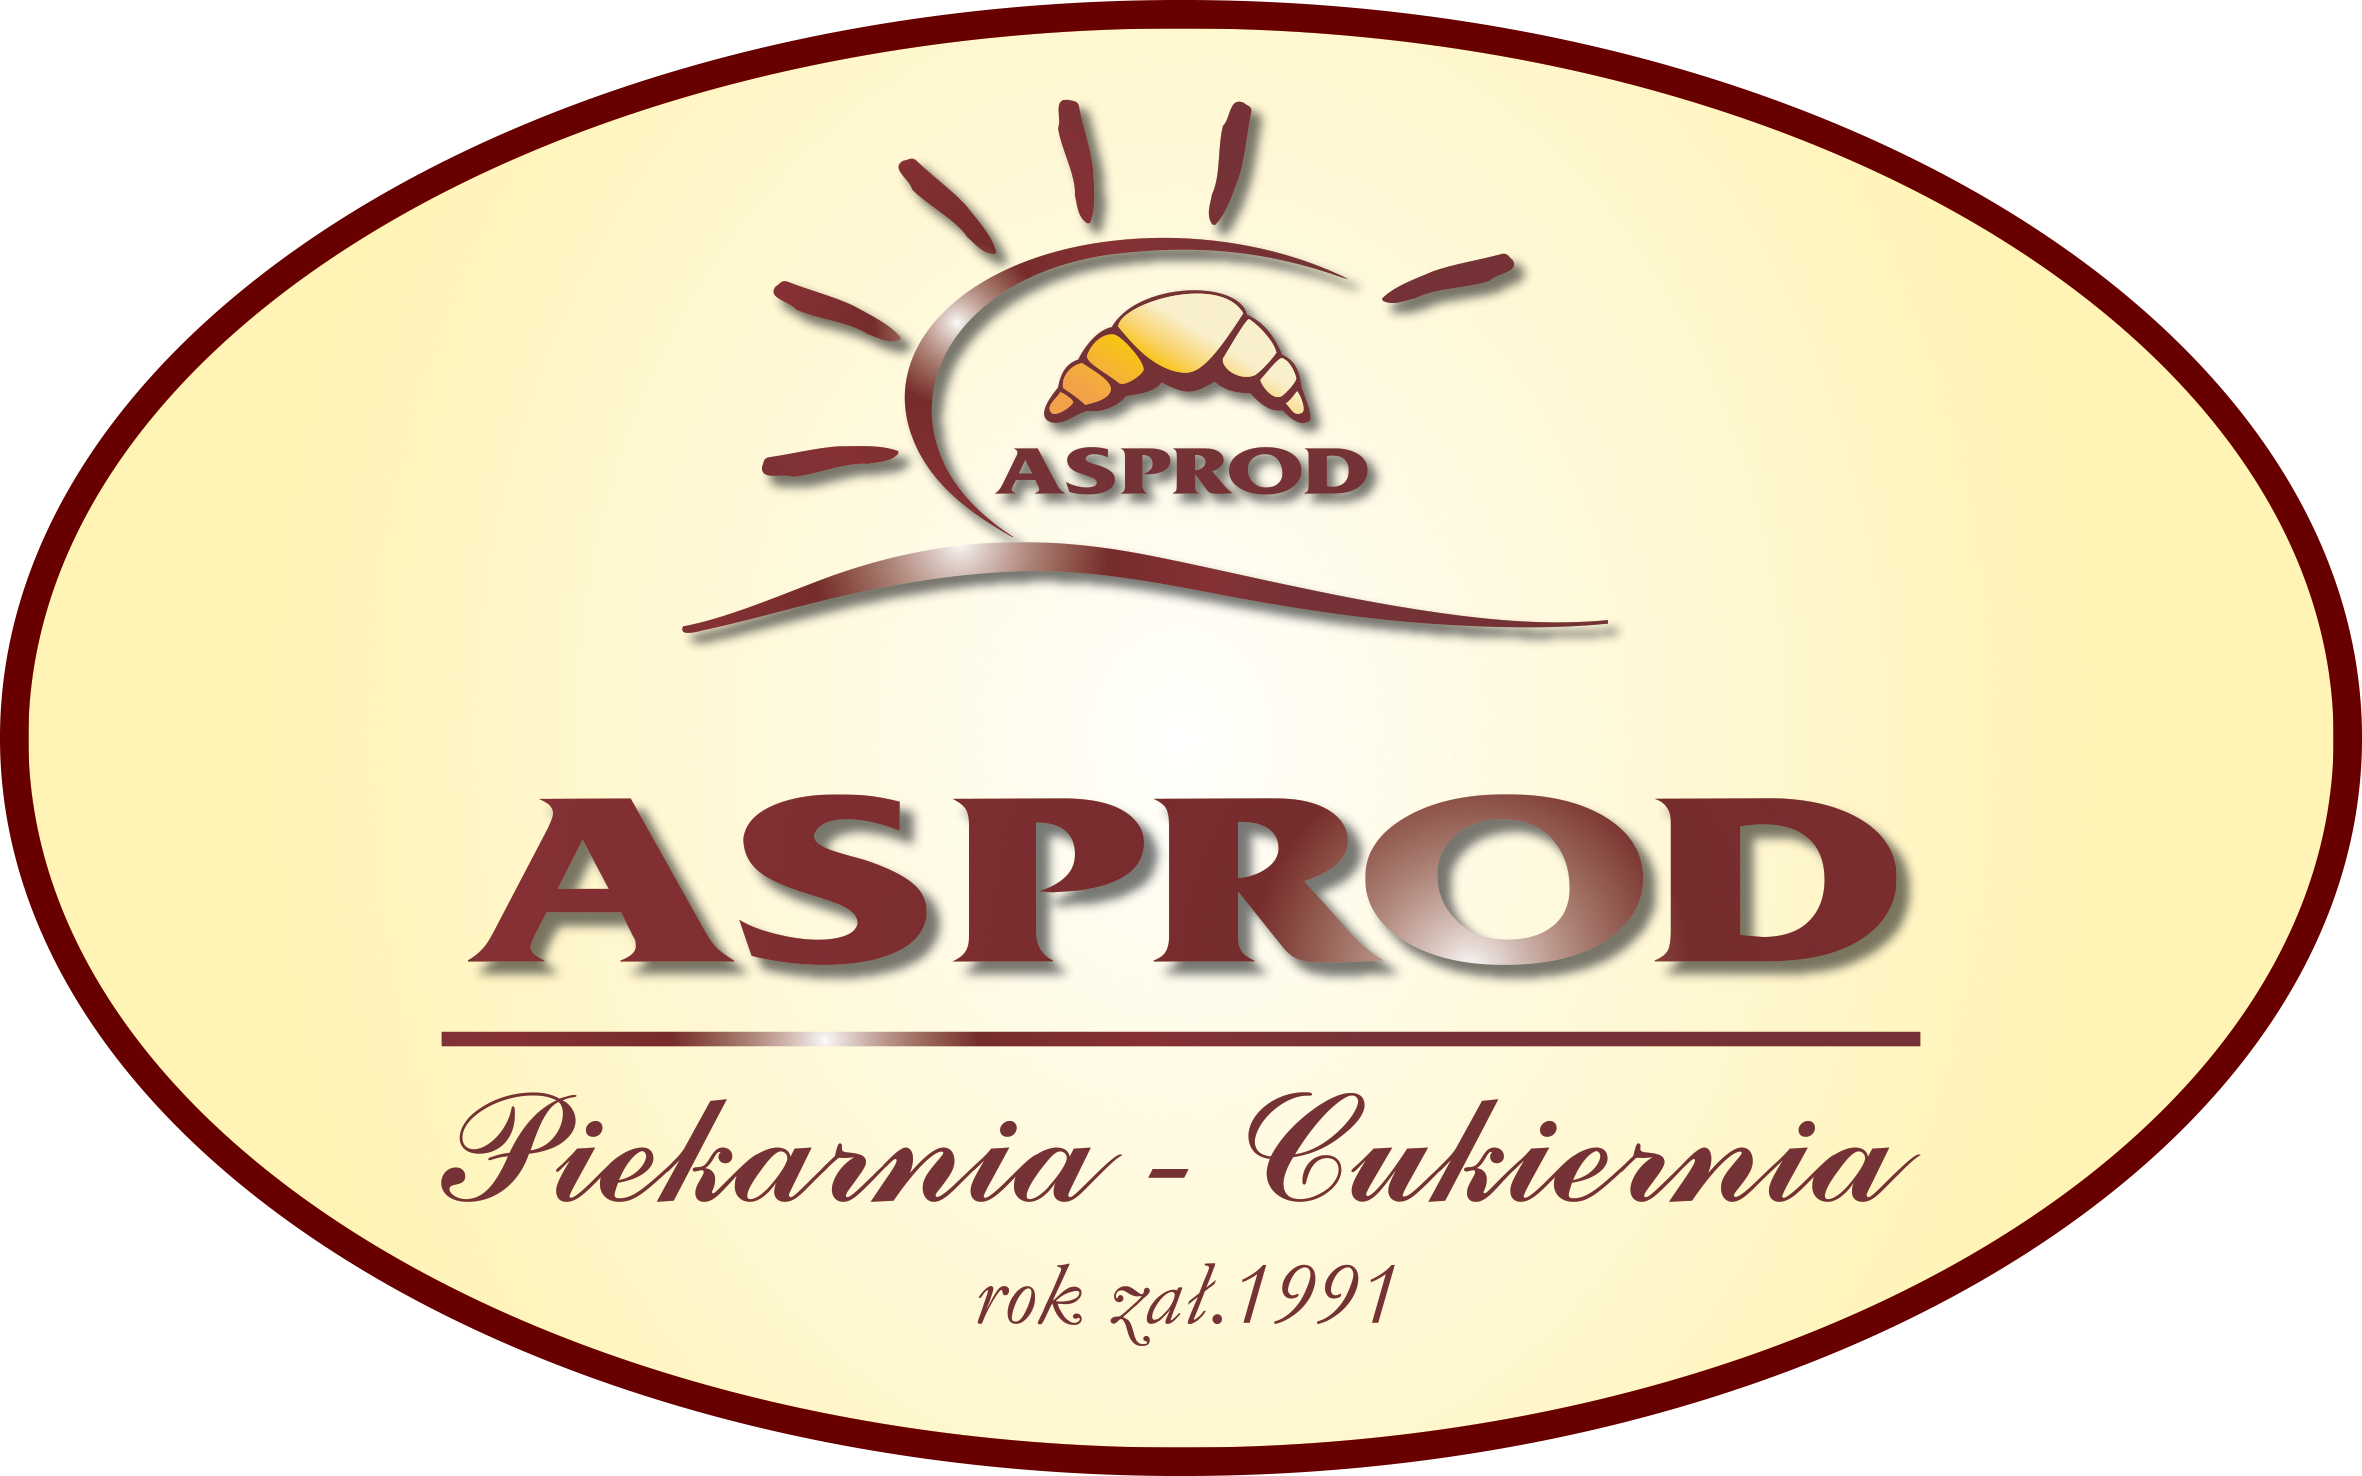 ASPROD logo